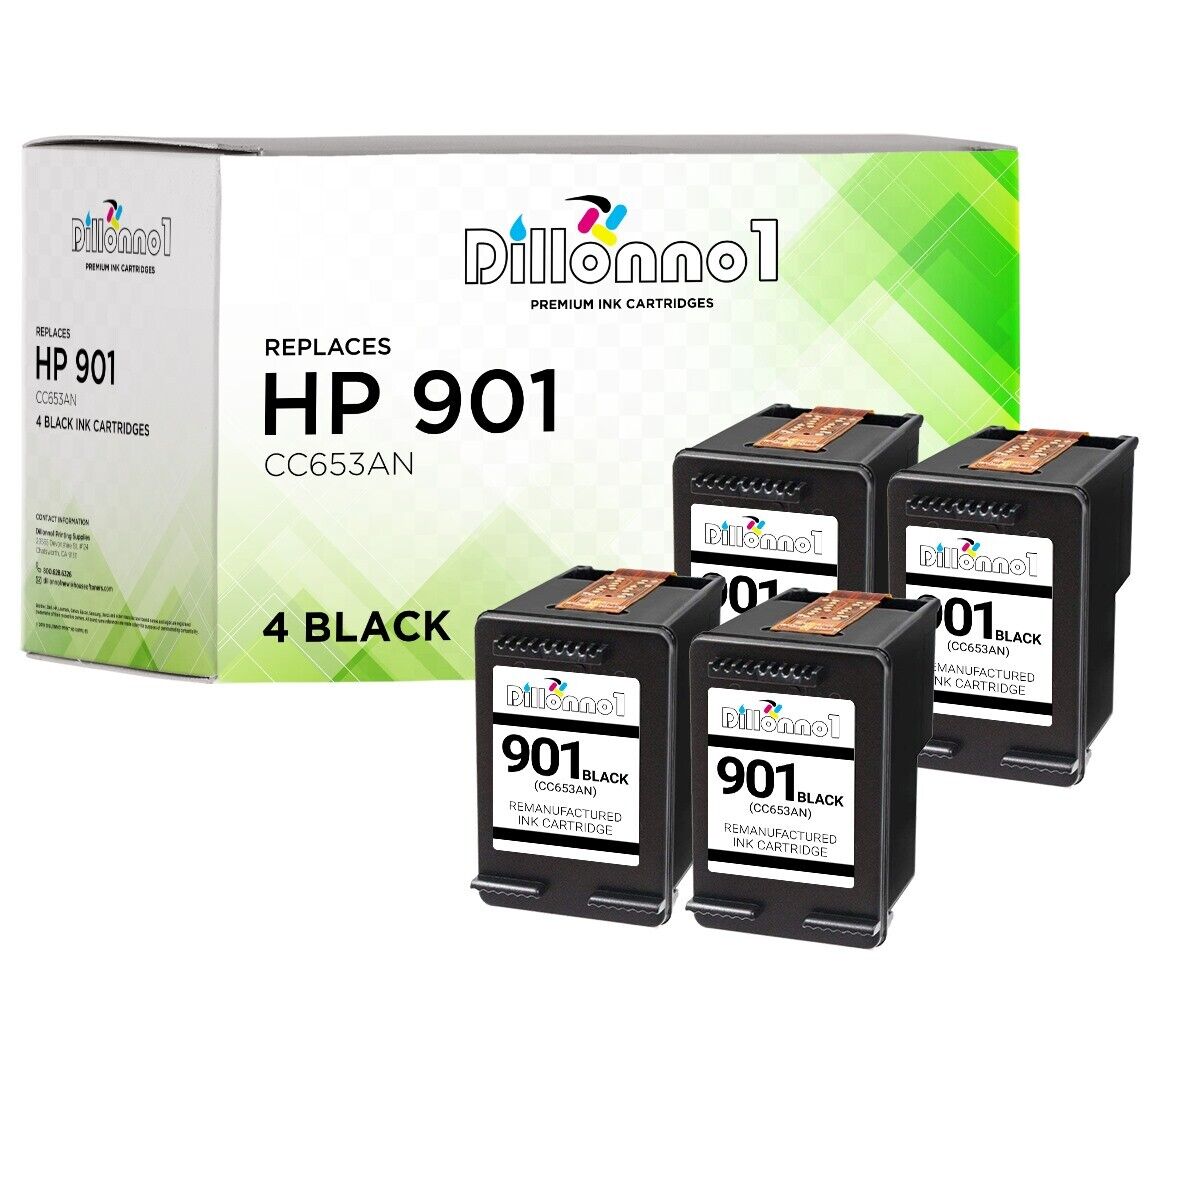 4 PACK For HP #901 Black Ink For HP Officejet 4500 G510 Series Printer